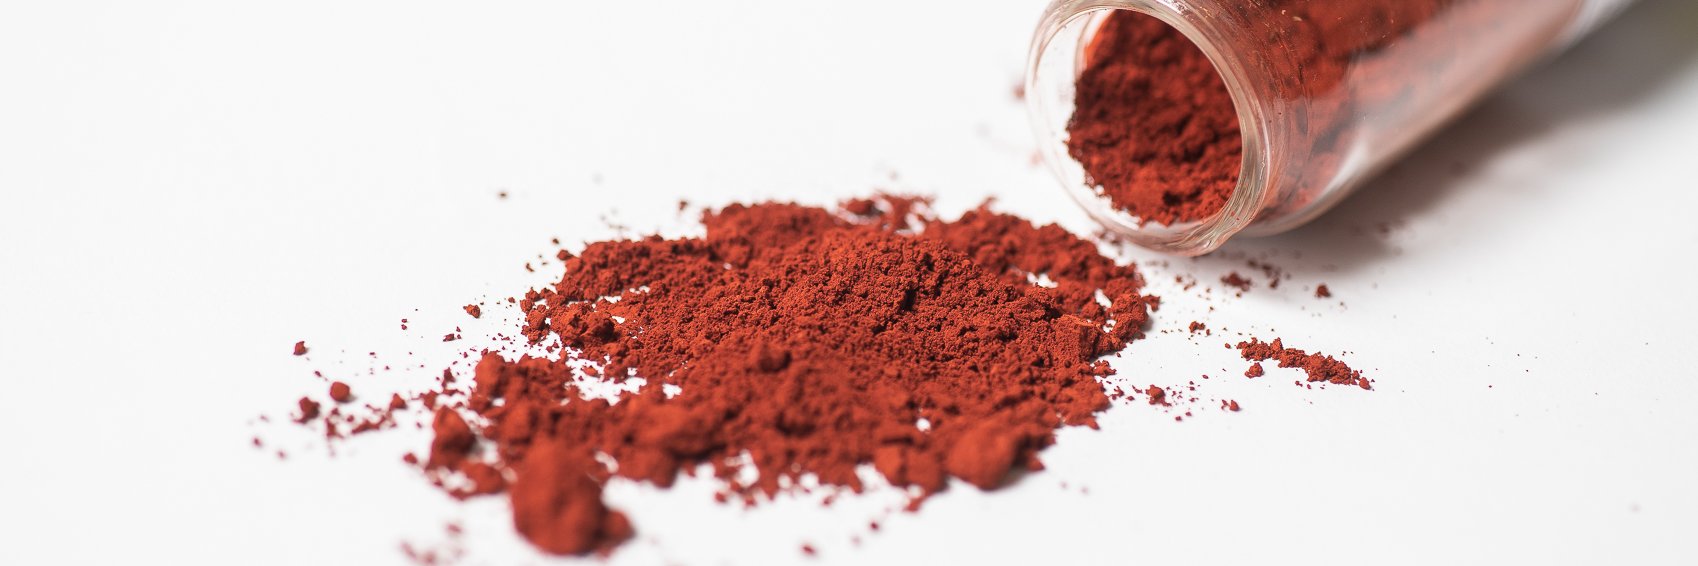 IBU-tec iron oxide powder as pigment or battery material